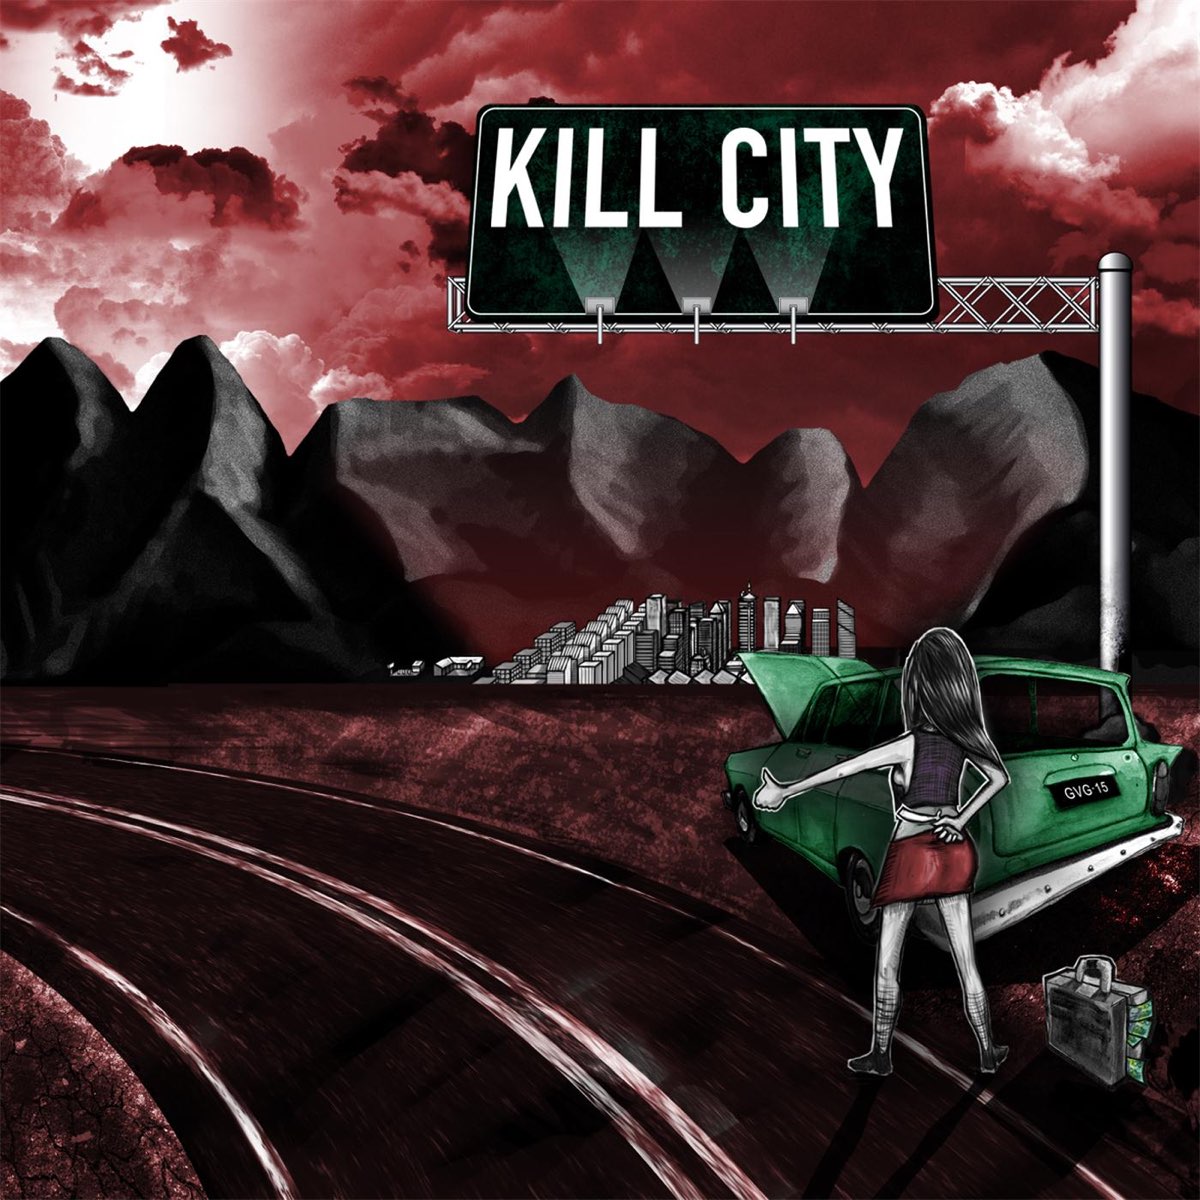 Killing city. Килл Сити Киллс. Kill City Kills Ellis. Go by van. Elite Sour Switchblade песня.